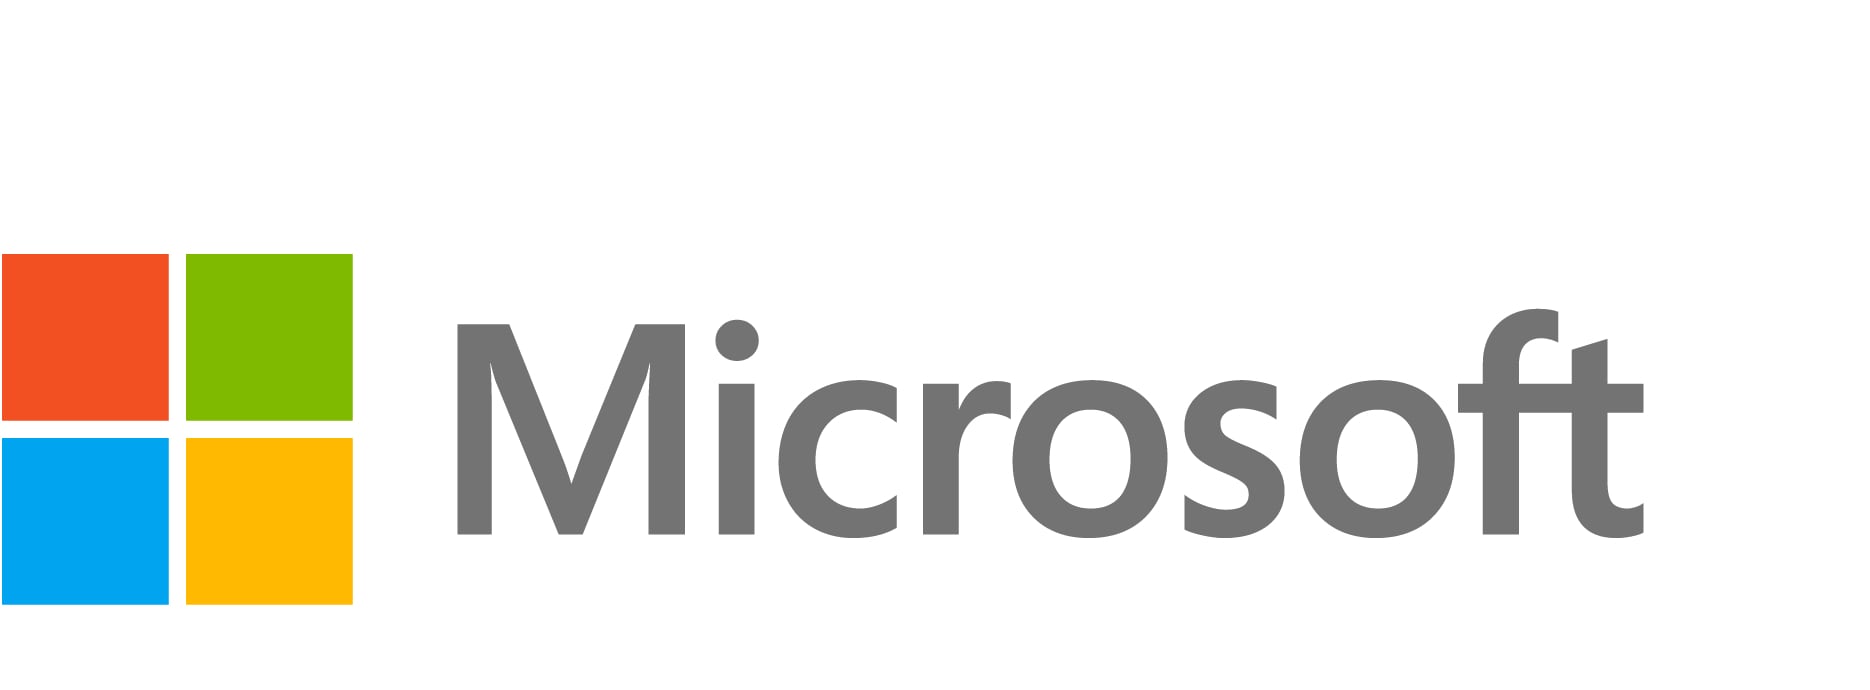 Microsoft Dynamics 365 for Customer Service, Enterprise Edition - subscript